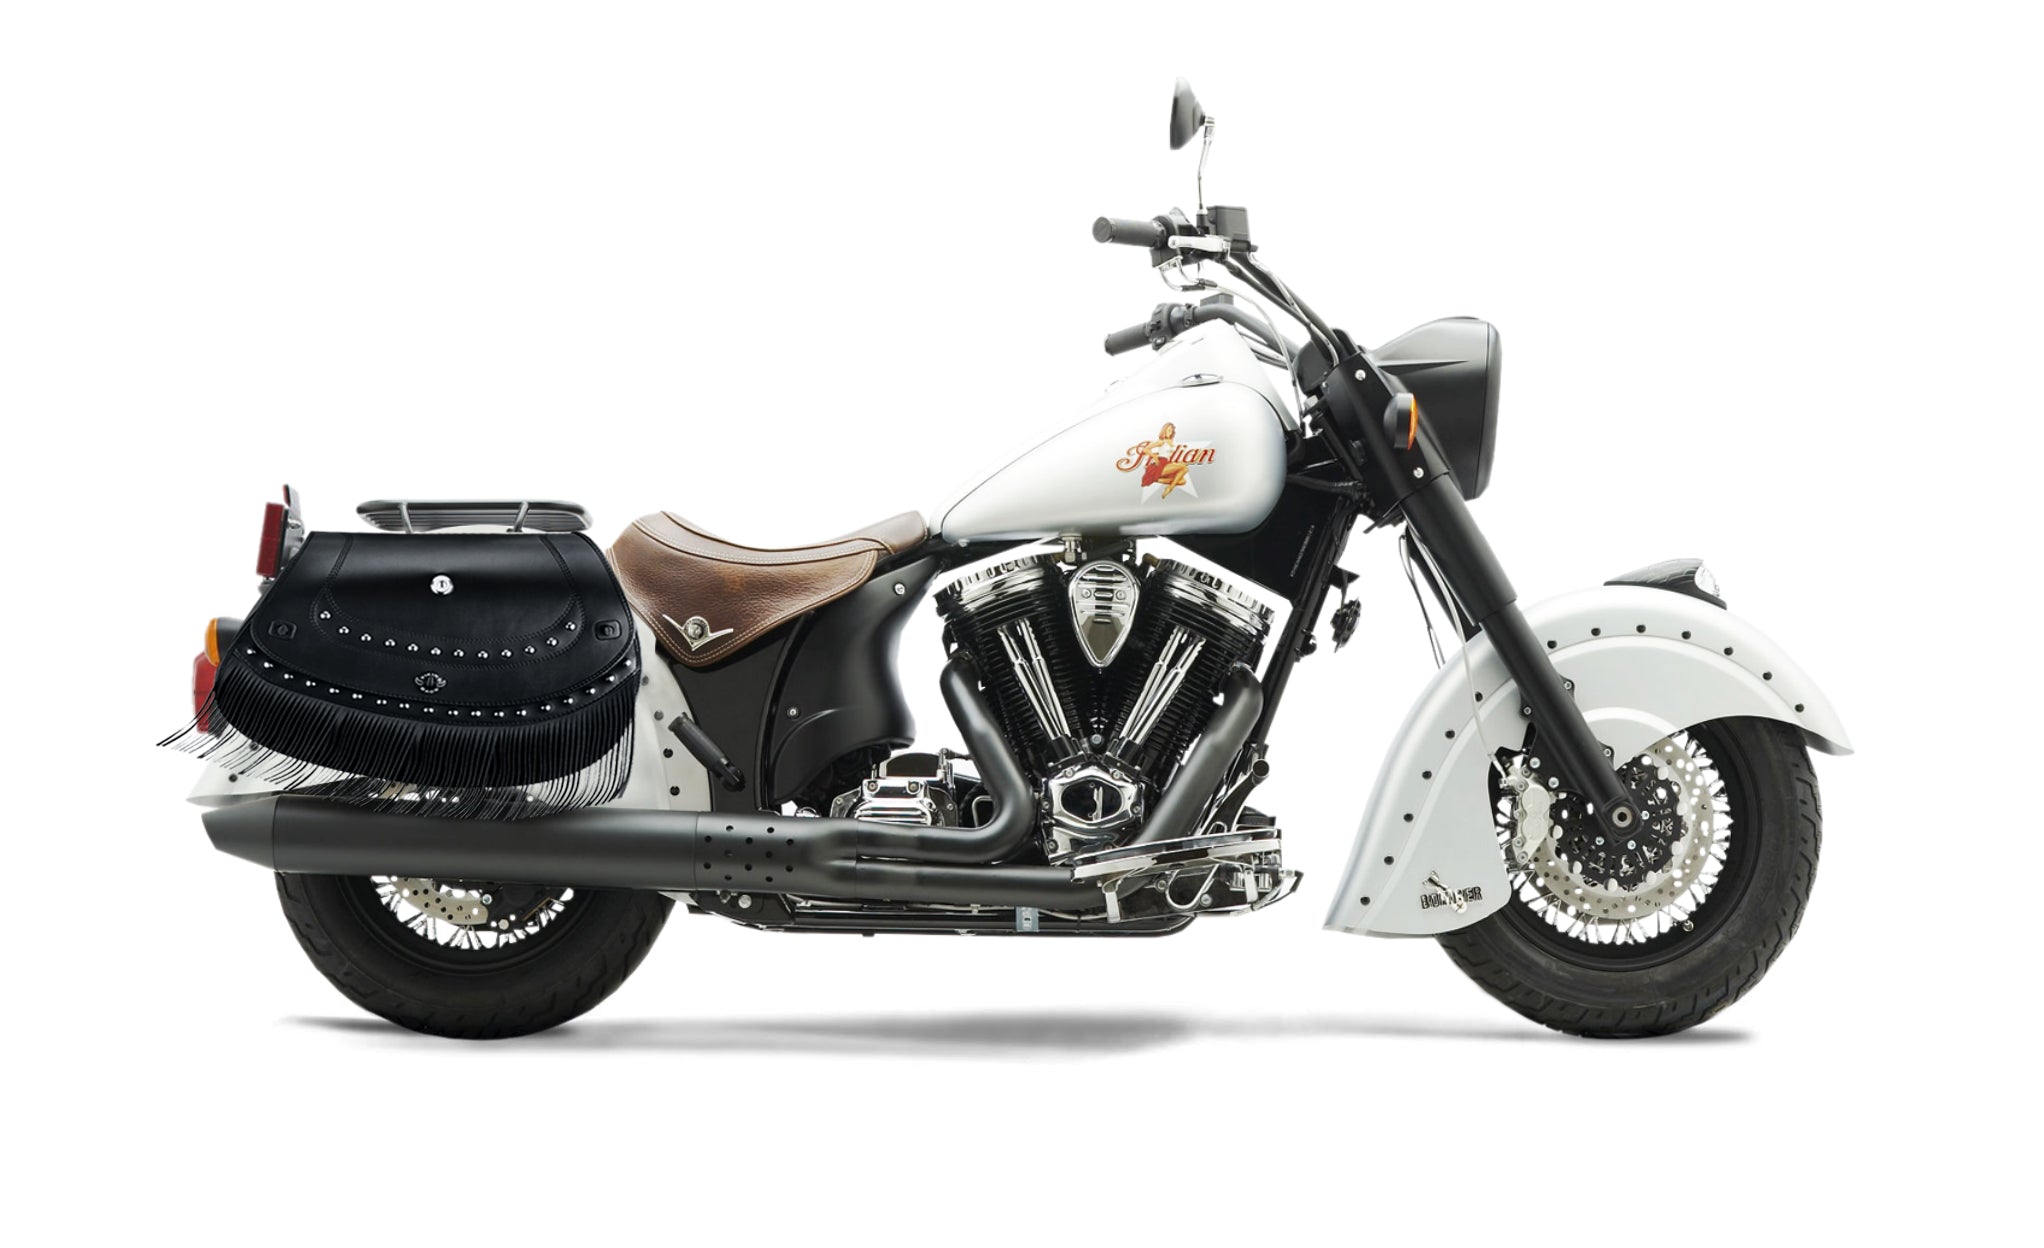 Viking Mohawk Extra Large Indian Chief Bomber Specific Leather Motorcycle Saddlebags on Bike Photo @expand